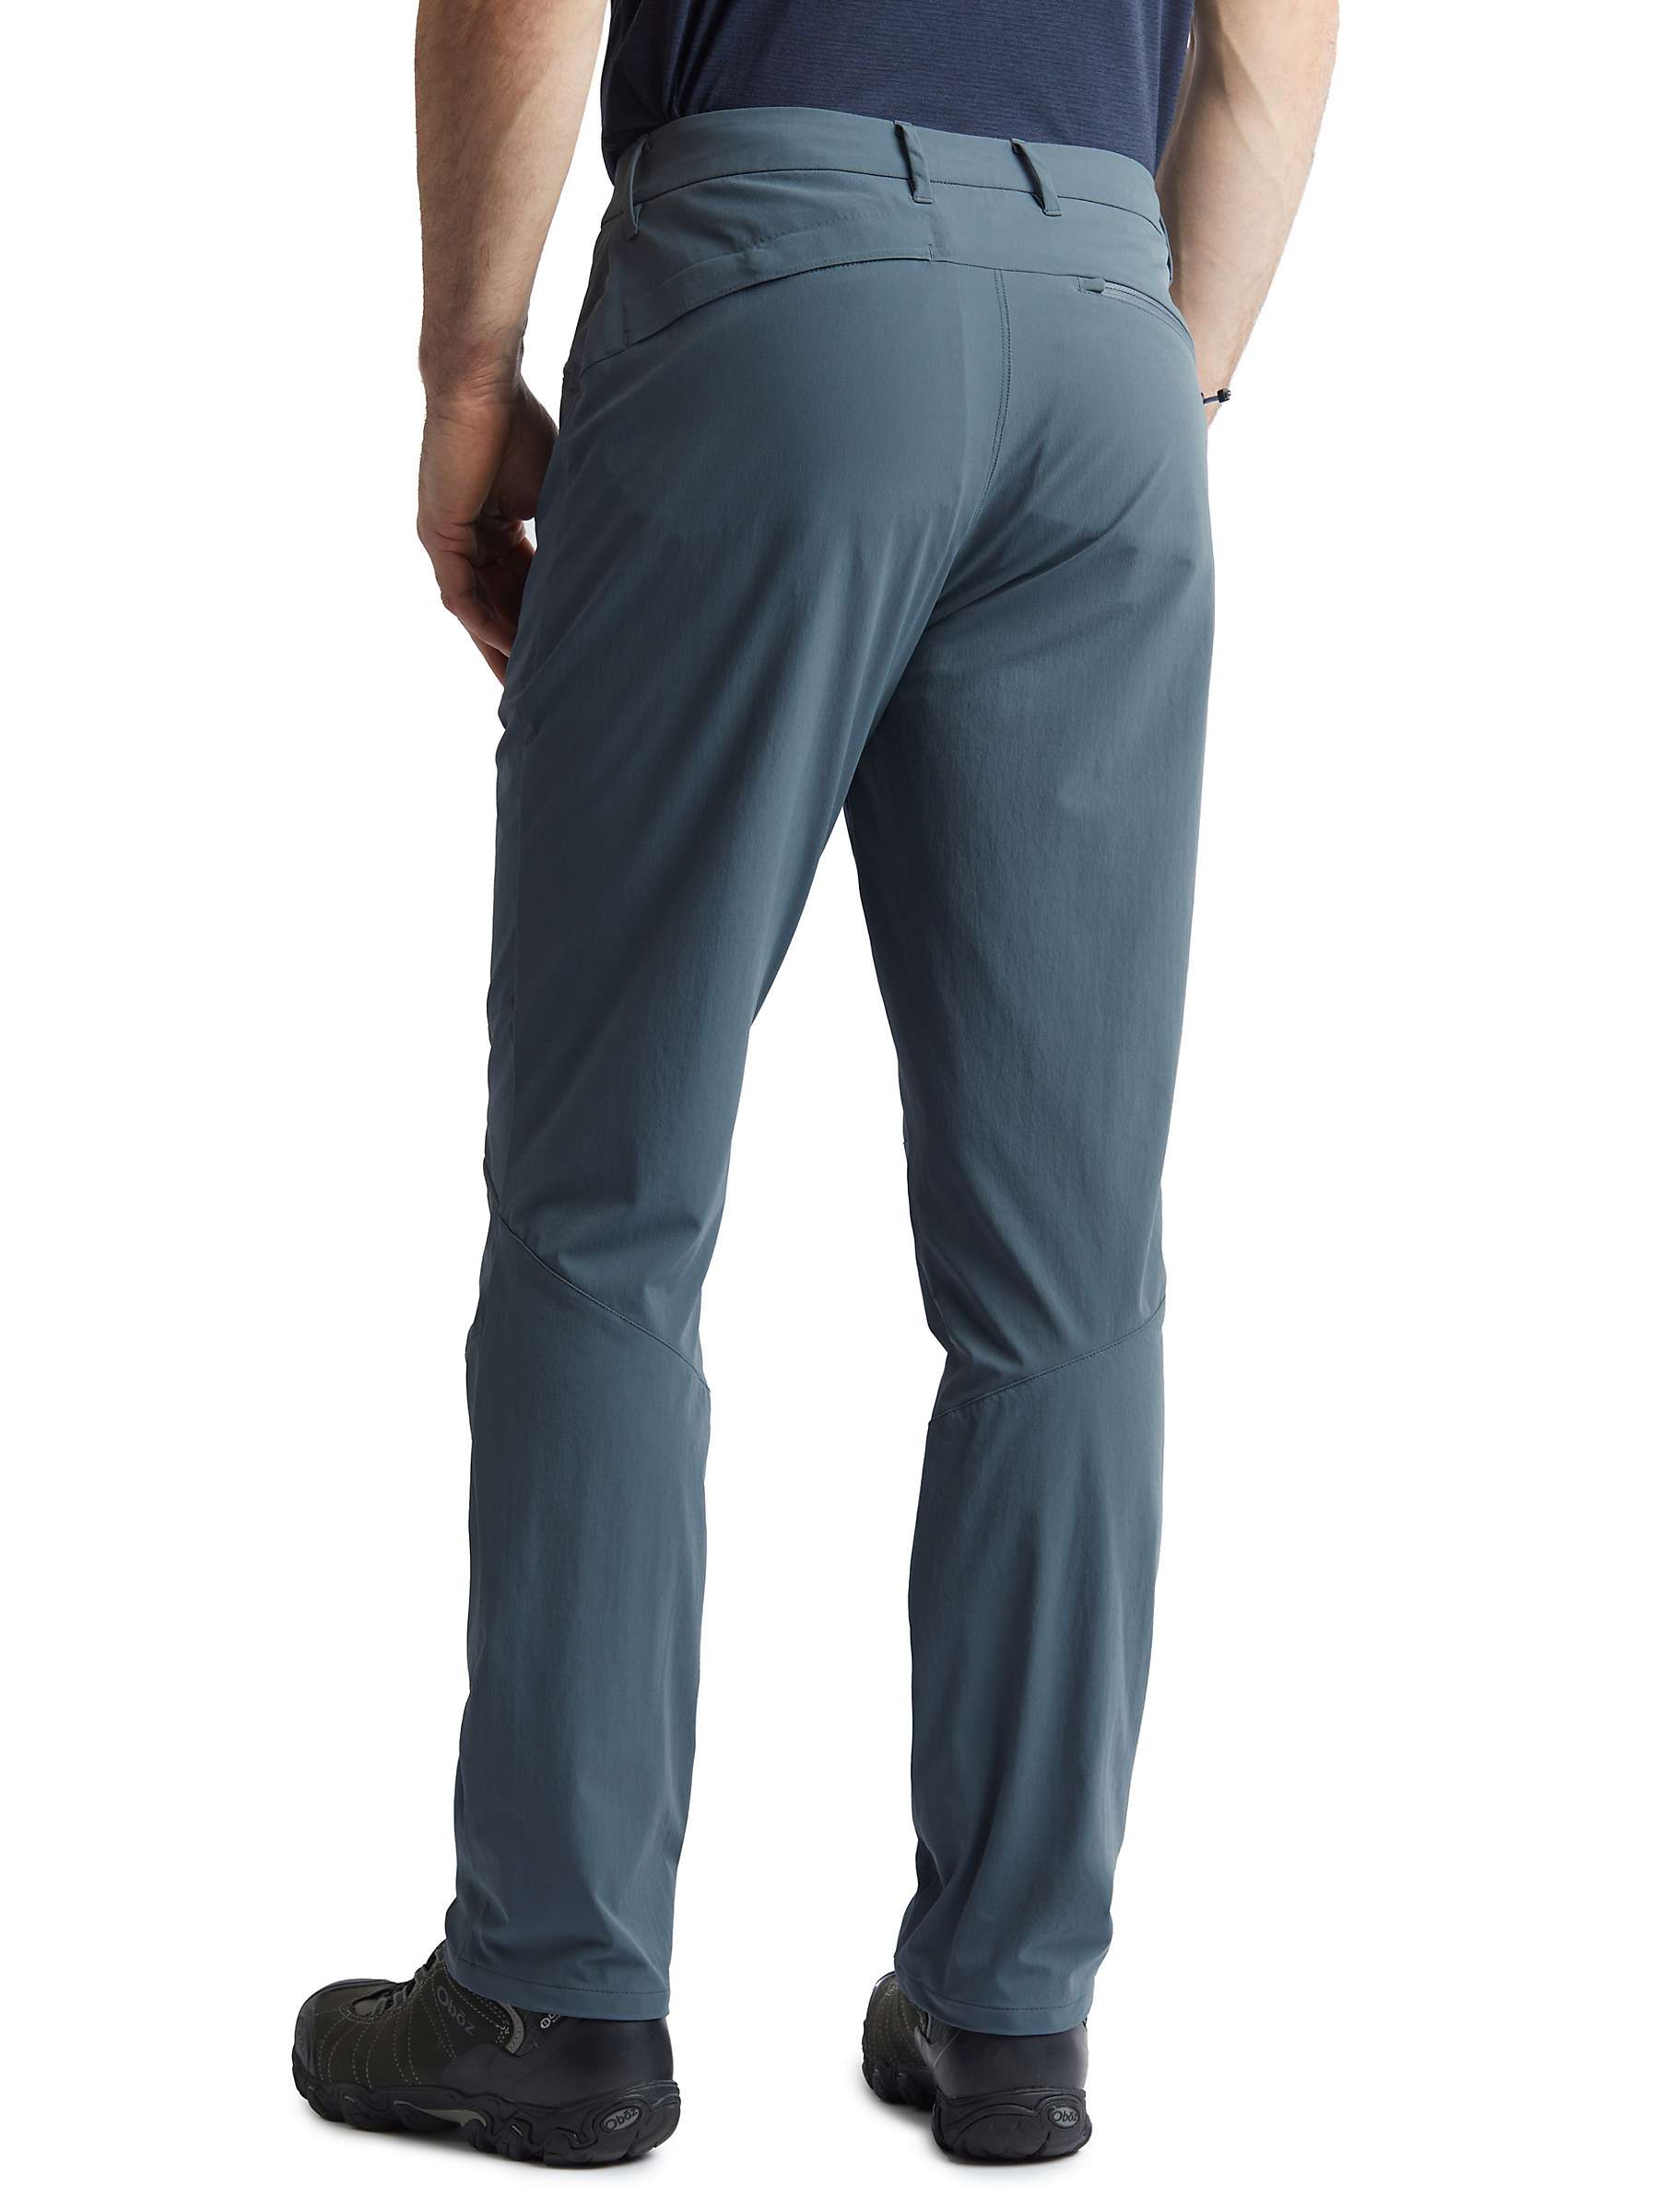 Buy Rohan Vista Lightweight Walking Trousers, Slate Grey Online at johnlewis.com